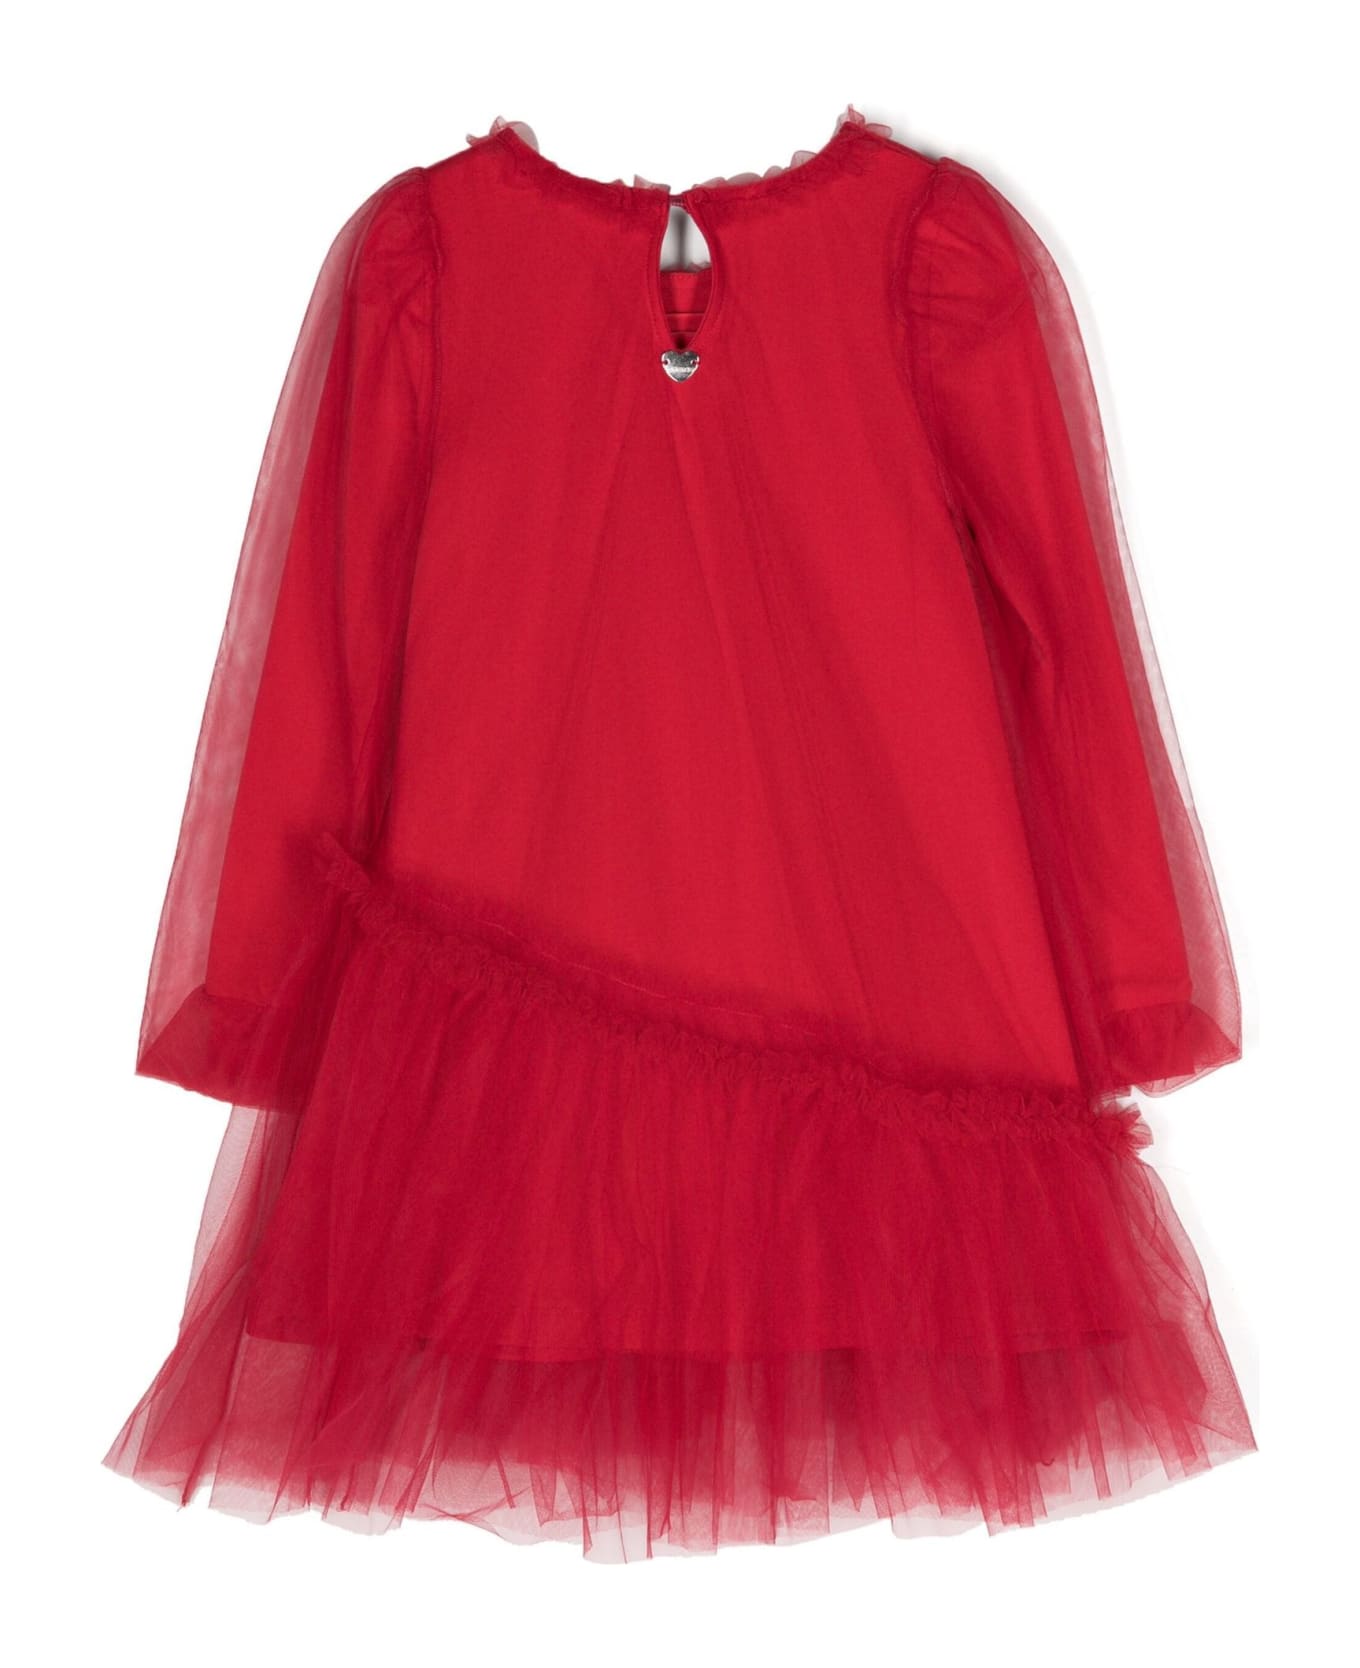 Monnalisa Dresses Red - Red